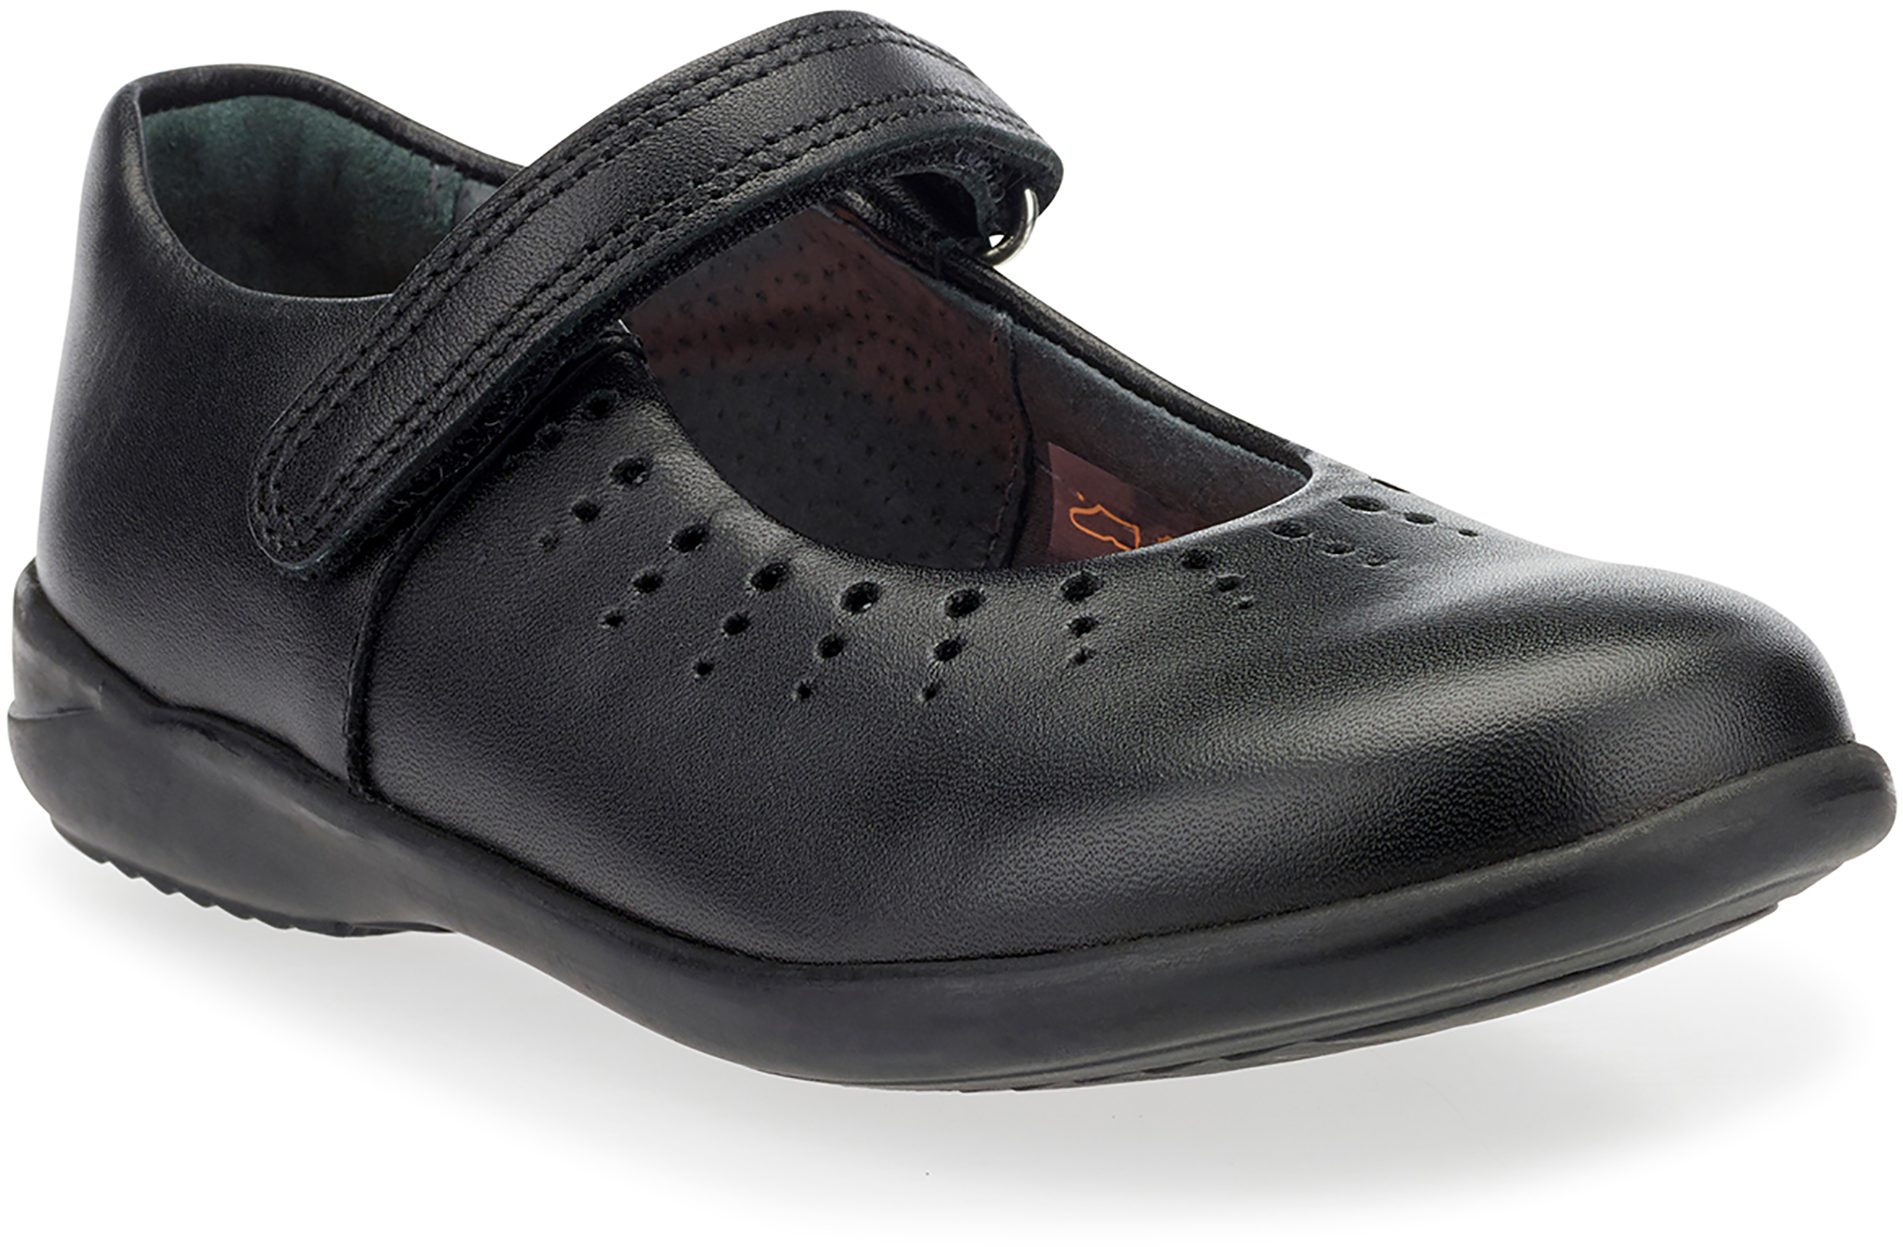 Start-Rite Mary Jane Black Leather 2746_7 - Girls School Shoes ...